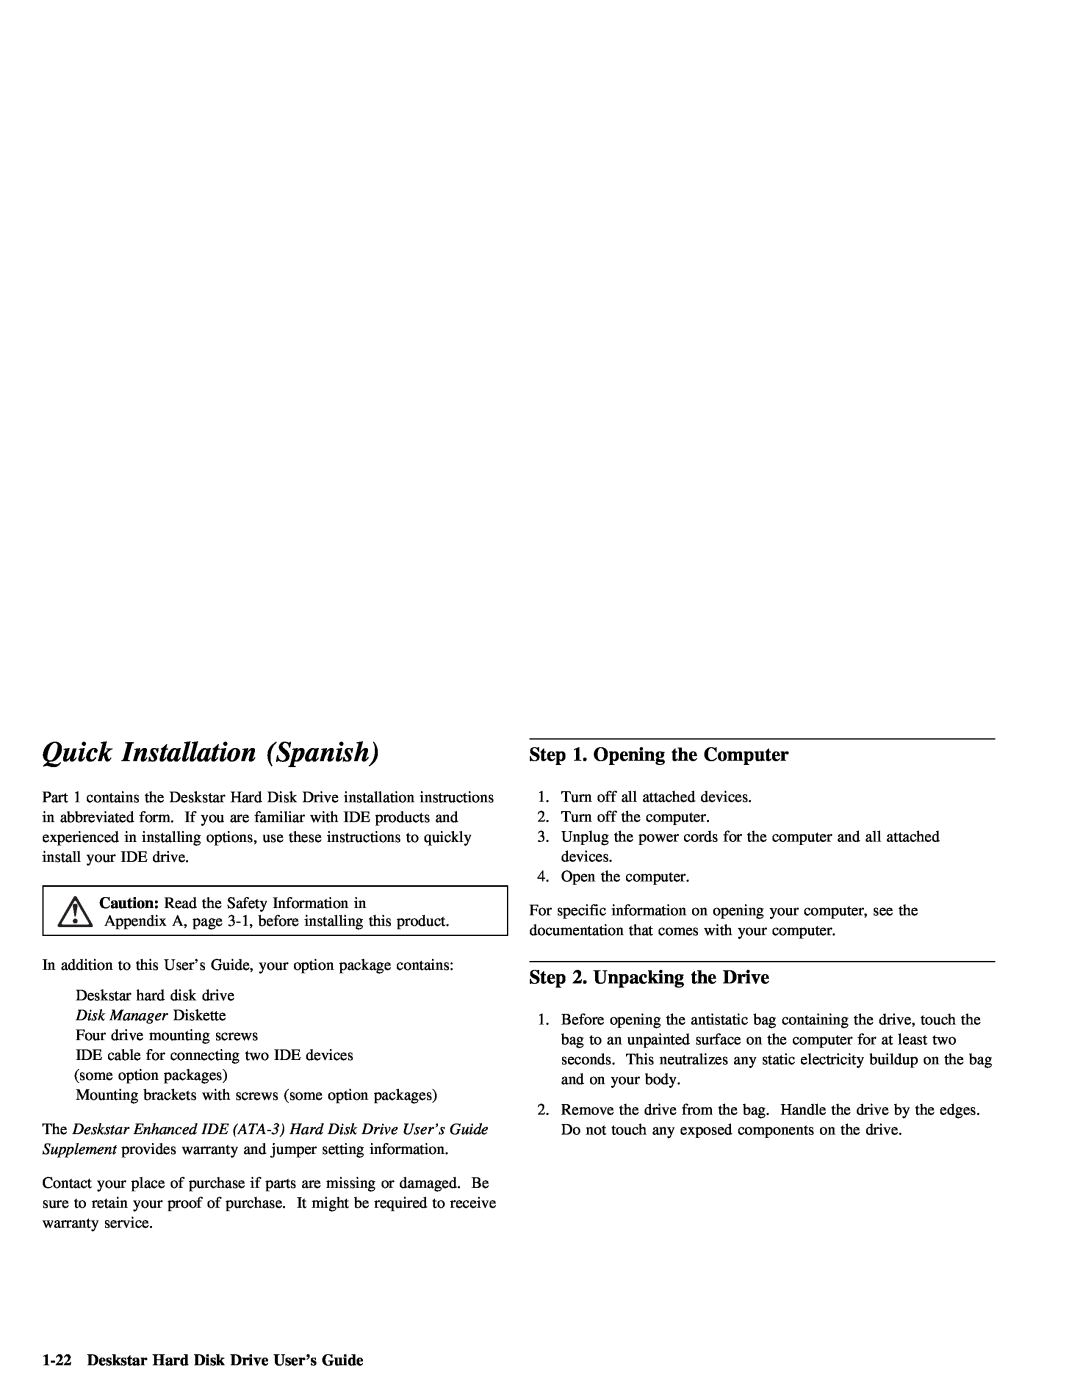 IBM ATA-3 manual Deskstar Hard Disk Drive User’s Guide, Spanish, Installation, Quick, Step 